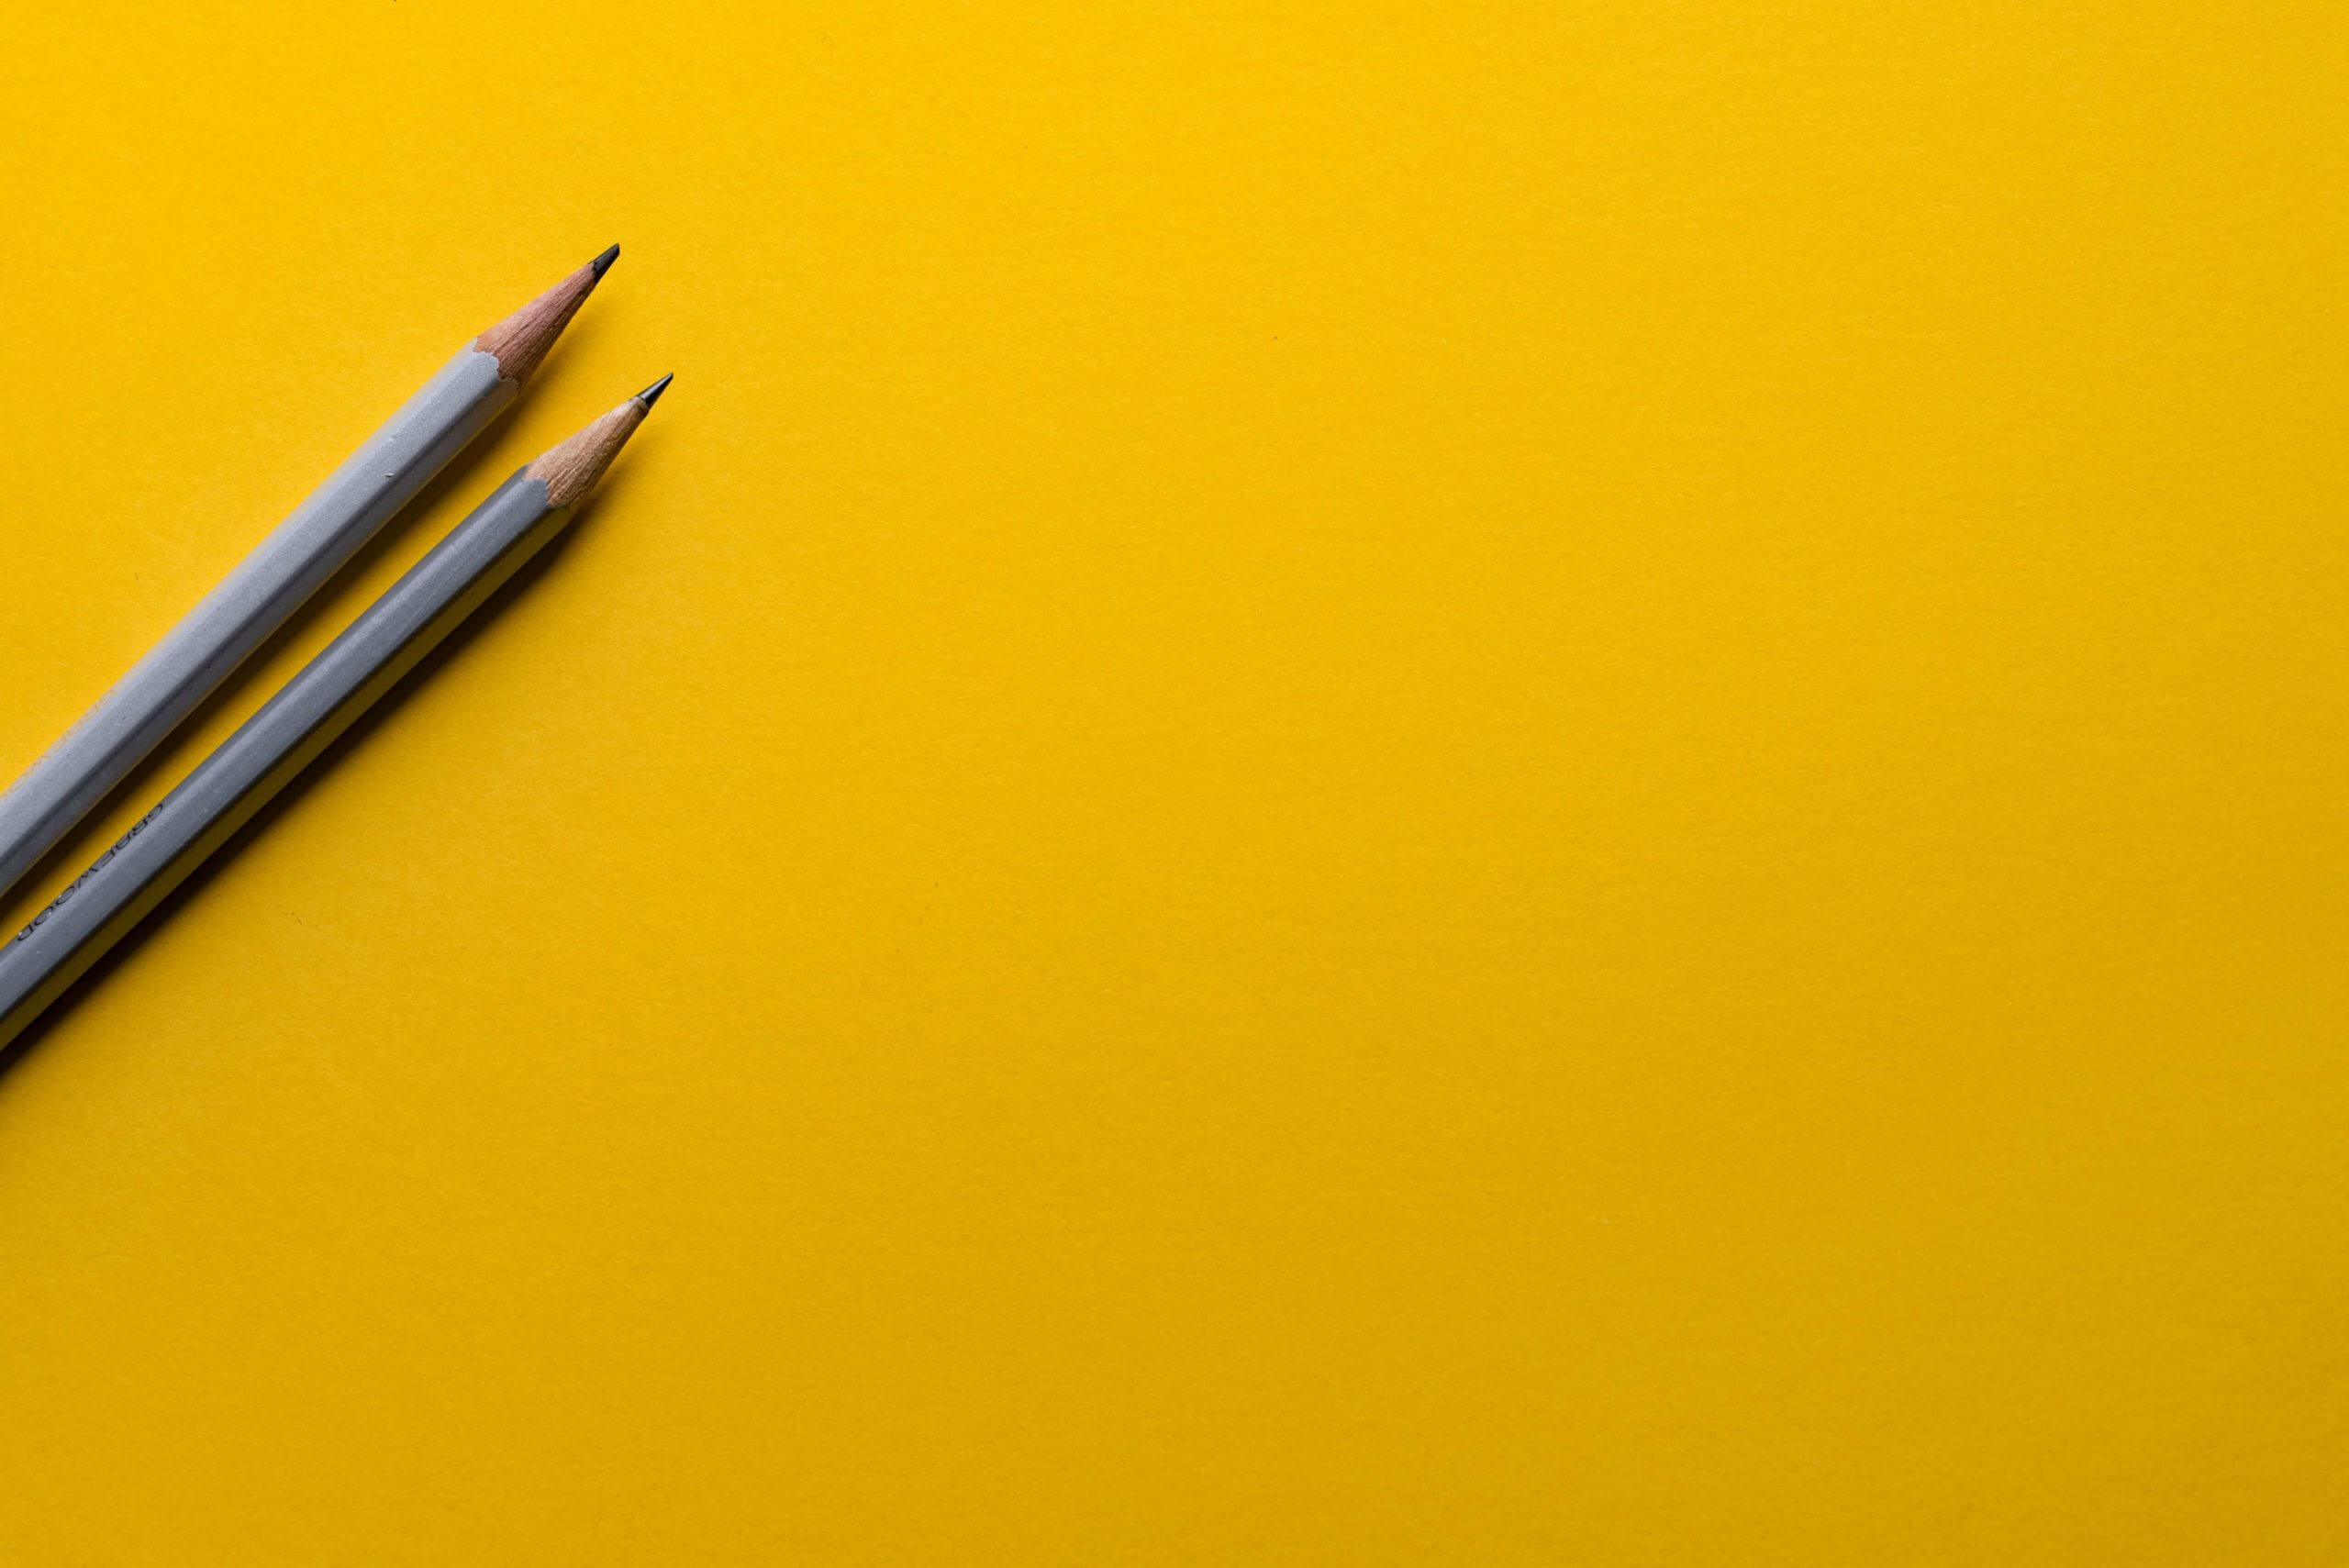 Grey pencils on yellow background